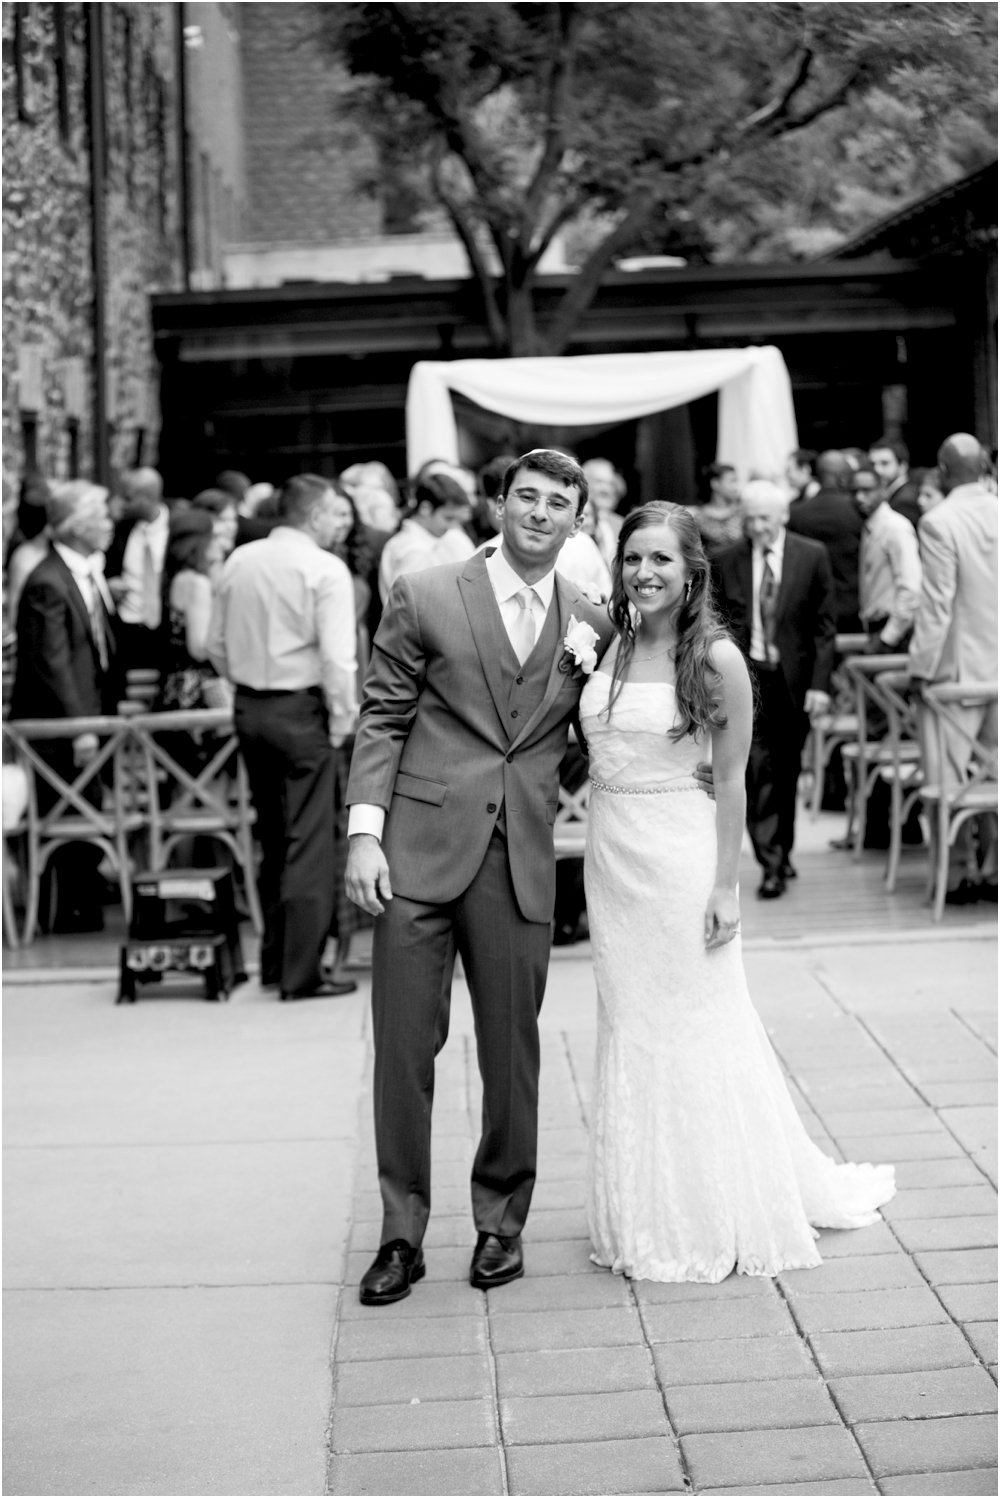 A Gold & White Inspired Mt Washington Mill Dye House Jewish Wedding | Living Radiant Photography | Michael Kors & Kate Spade Wedding